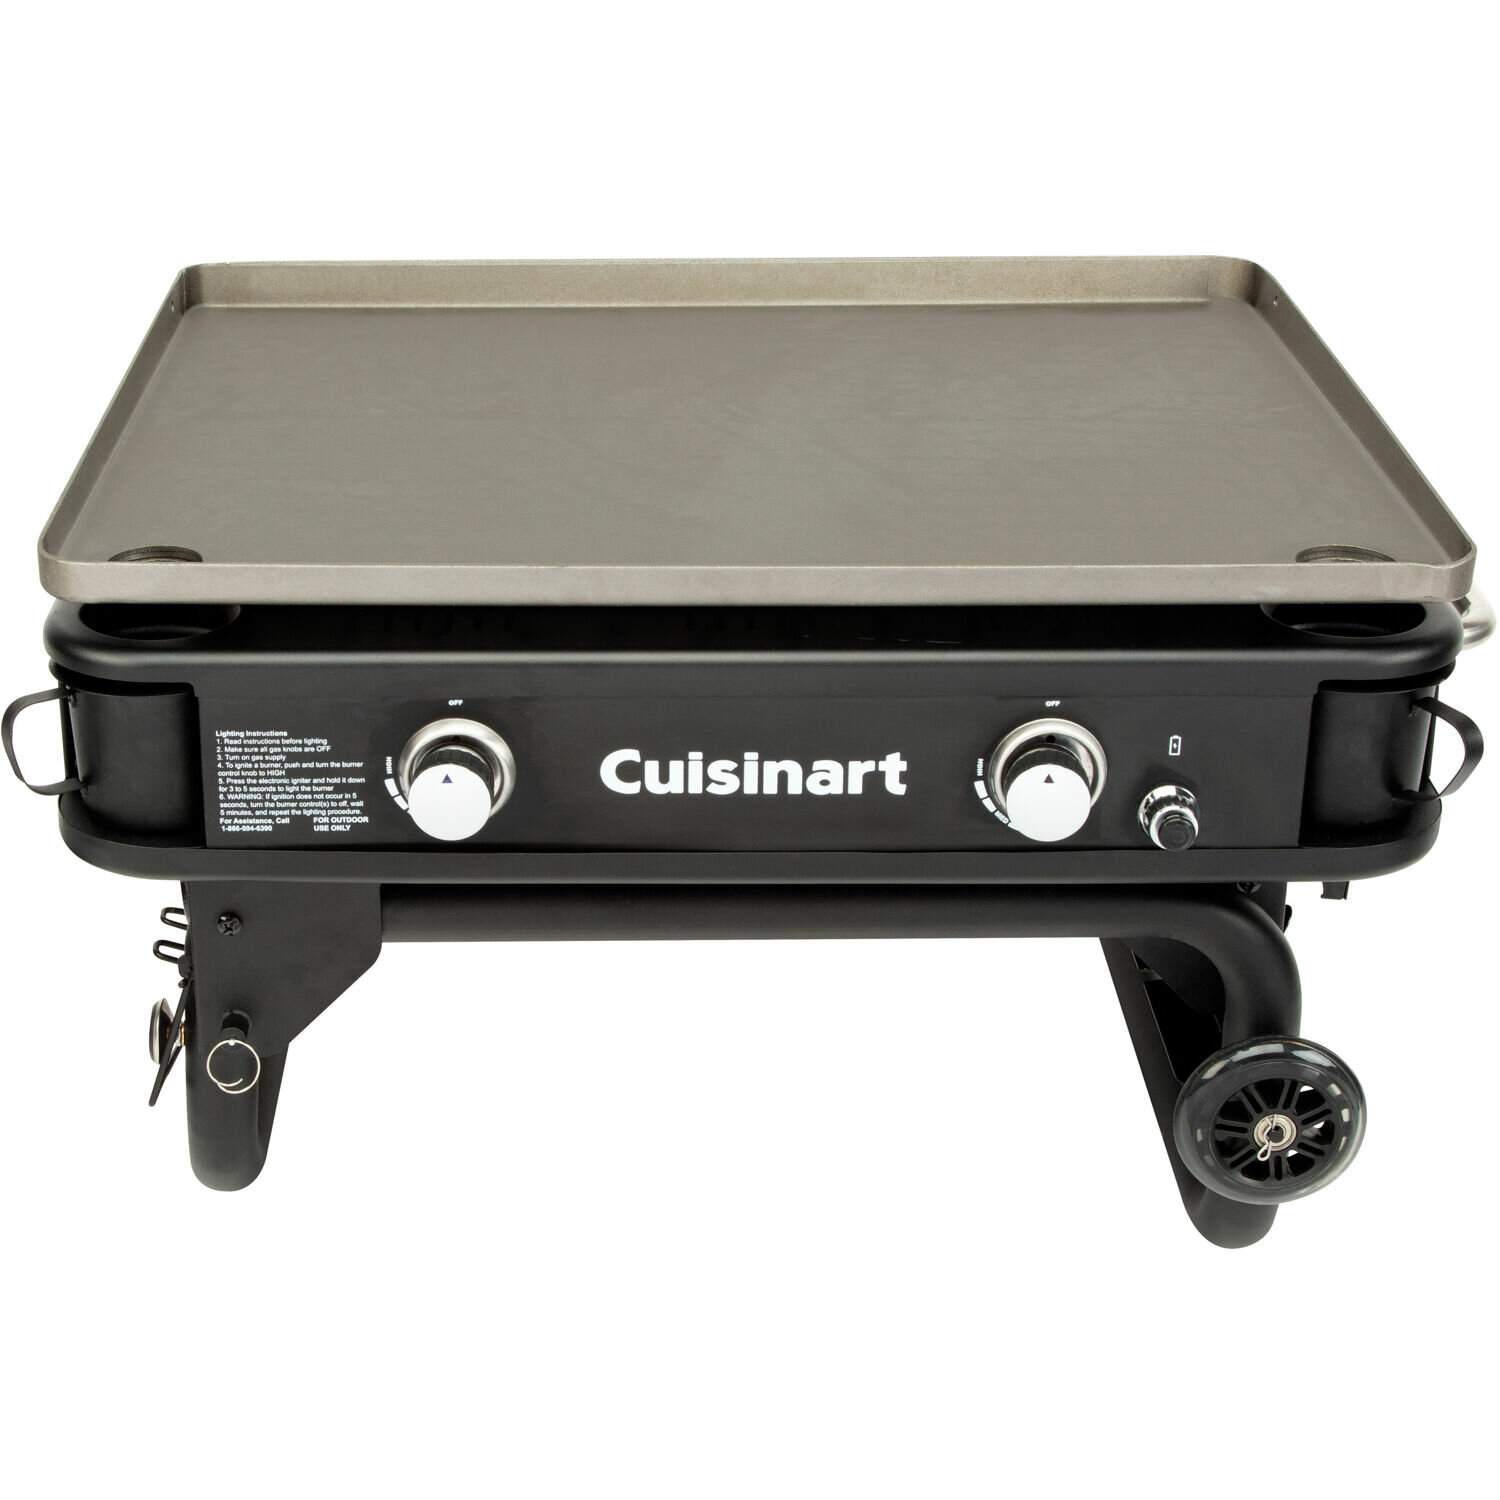 Cuisinart 2-Burner Flat Top Propane Gas Grill